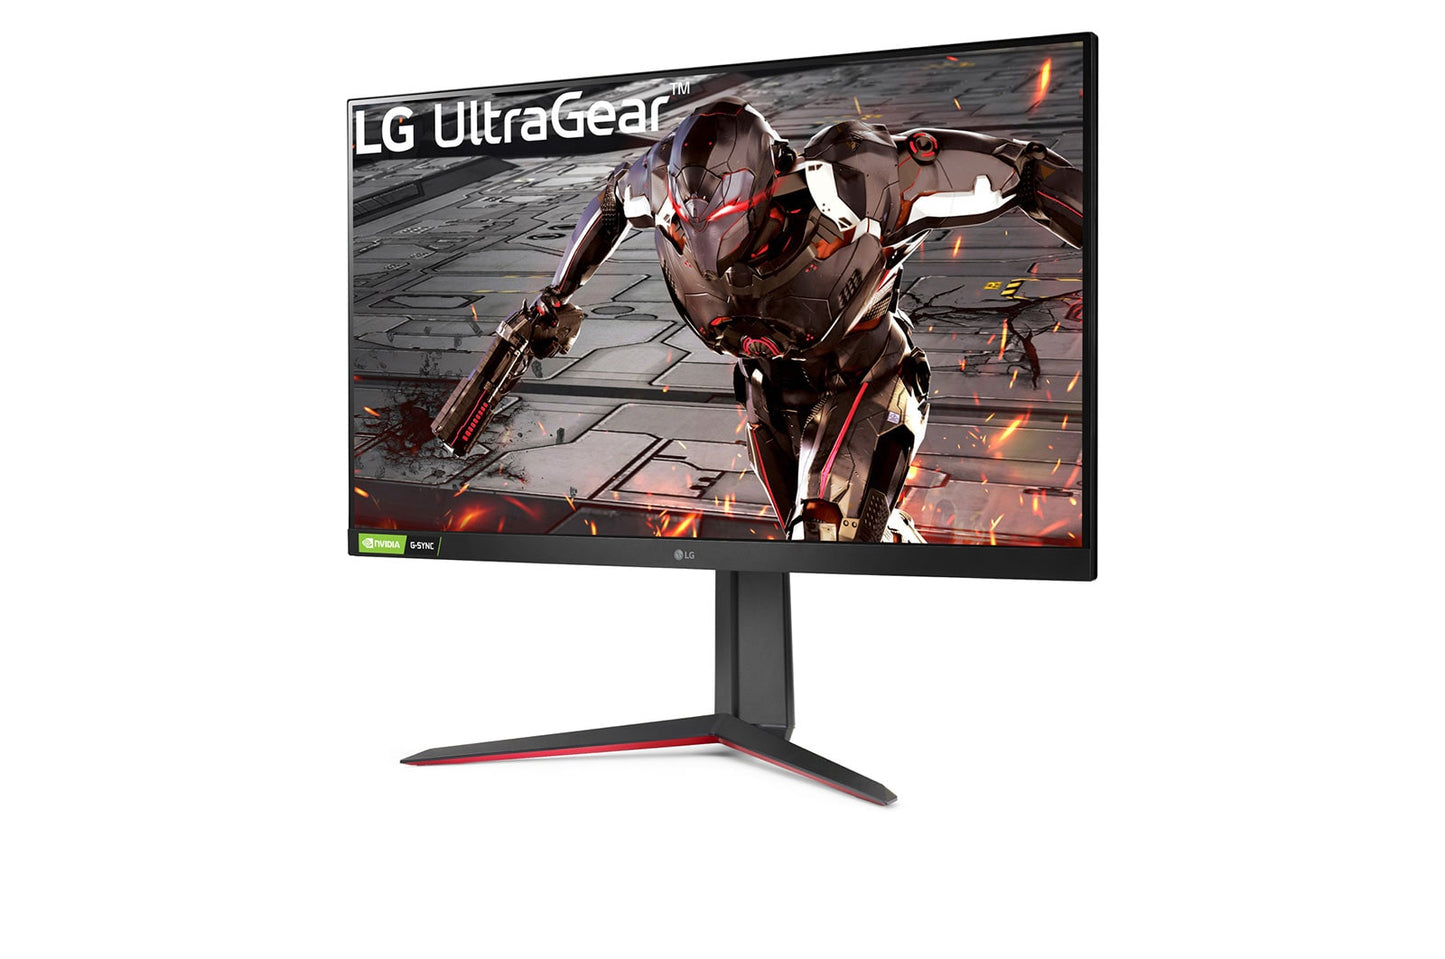 LG 32GN550-B UltraGear 32" Fhd 165Hz 1ms Gaming Monitor (Brand New)